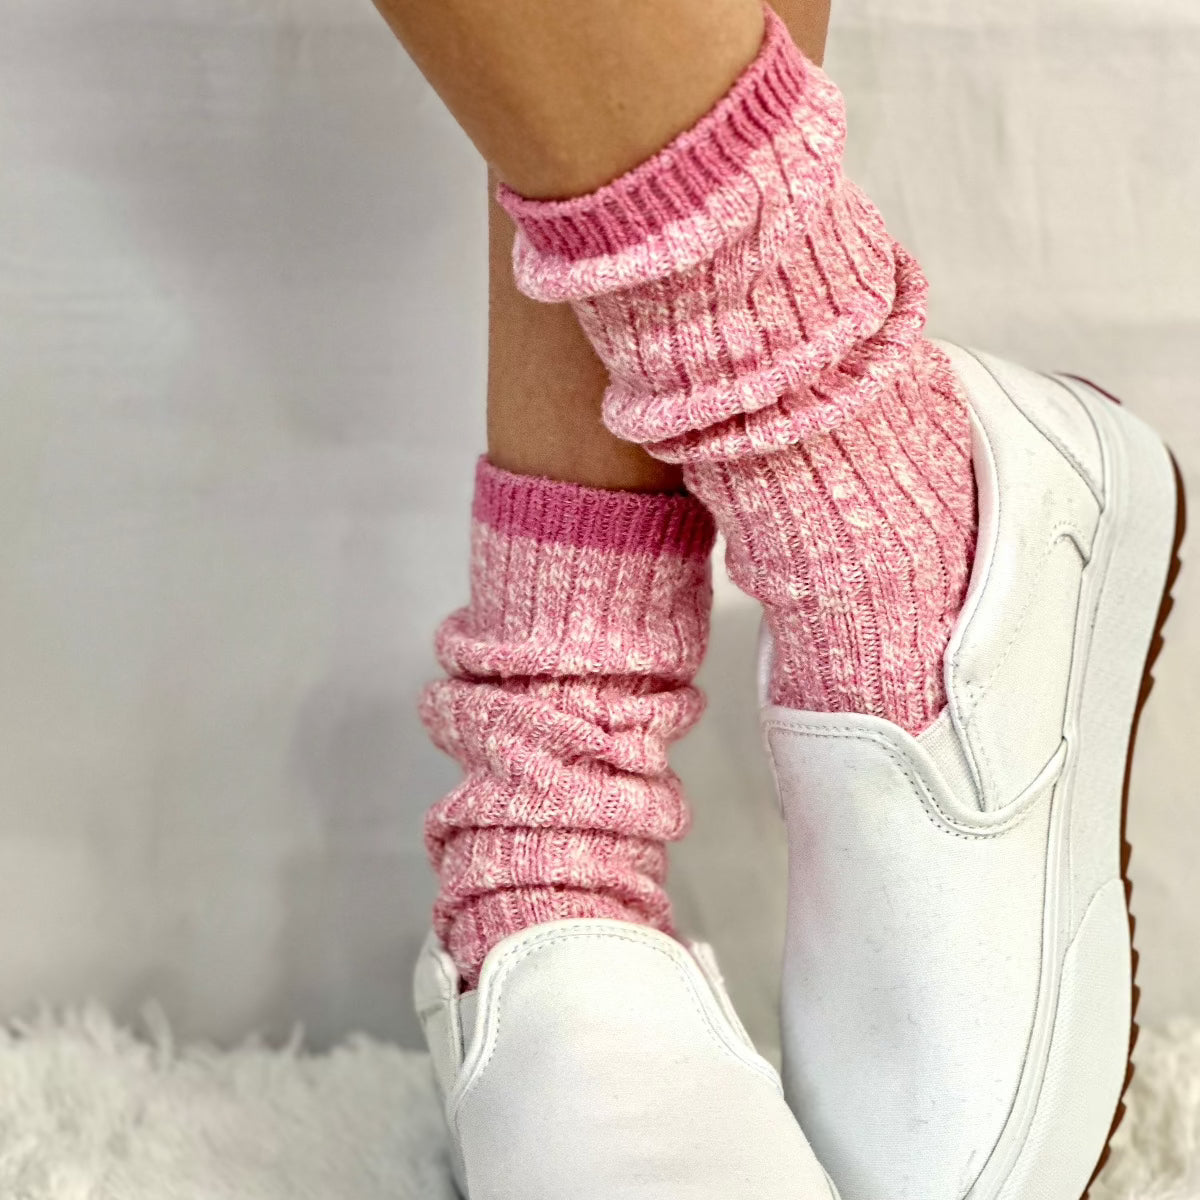 PINK fashion short boot socks, best crew ankle socks women's, usa made